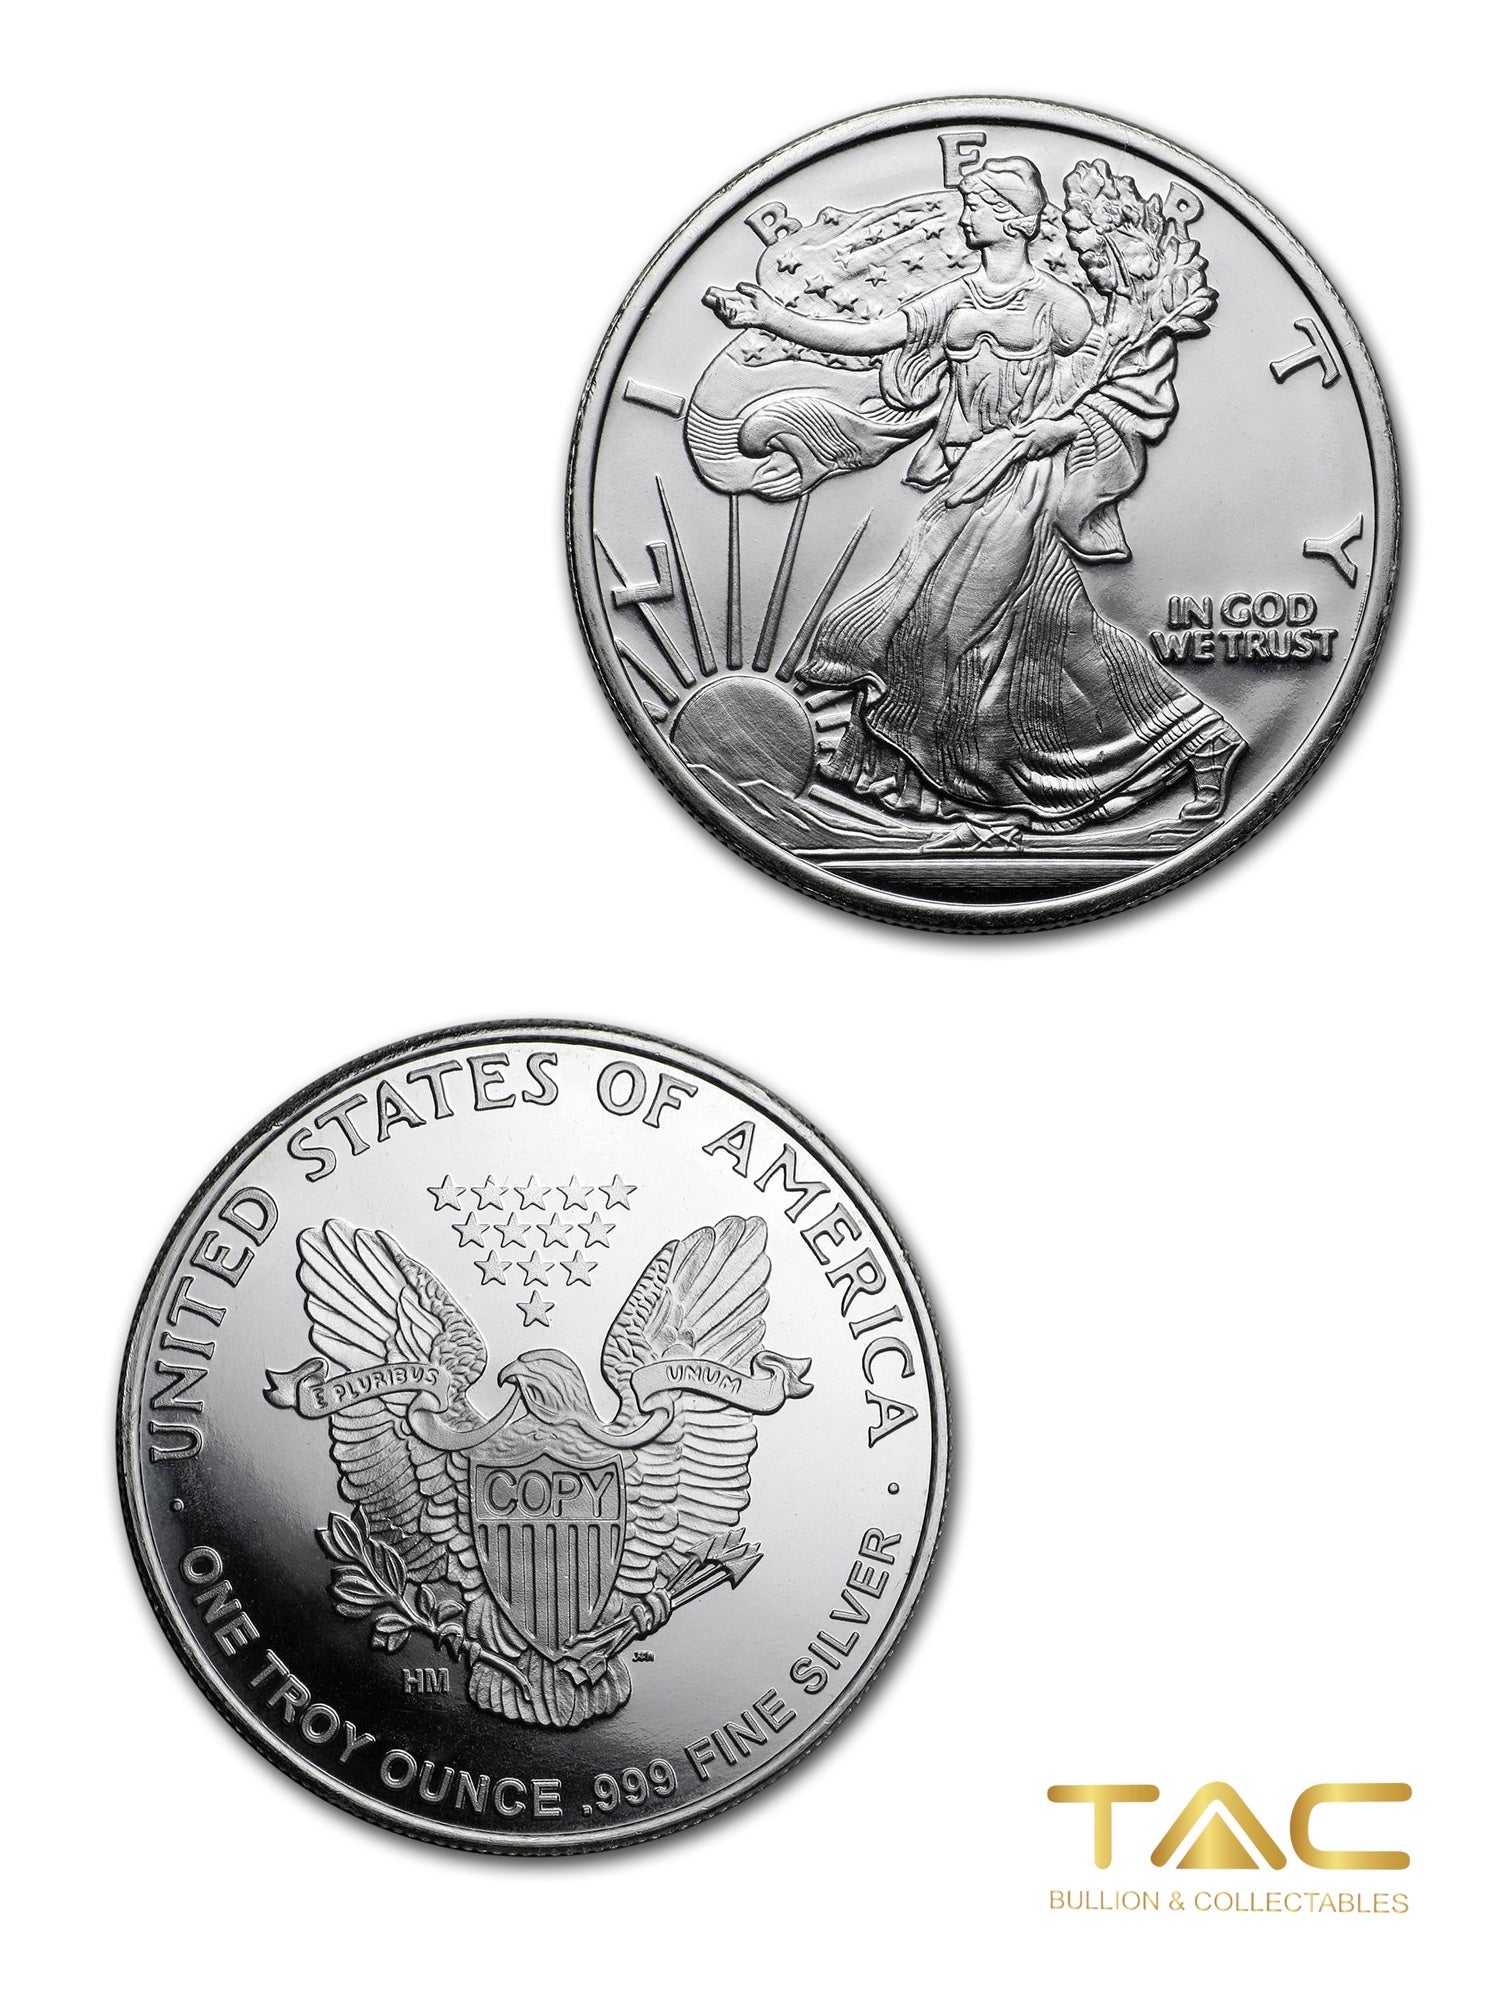 1 oz Silver Round - Walking Liberty - (Original Design)